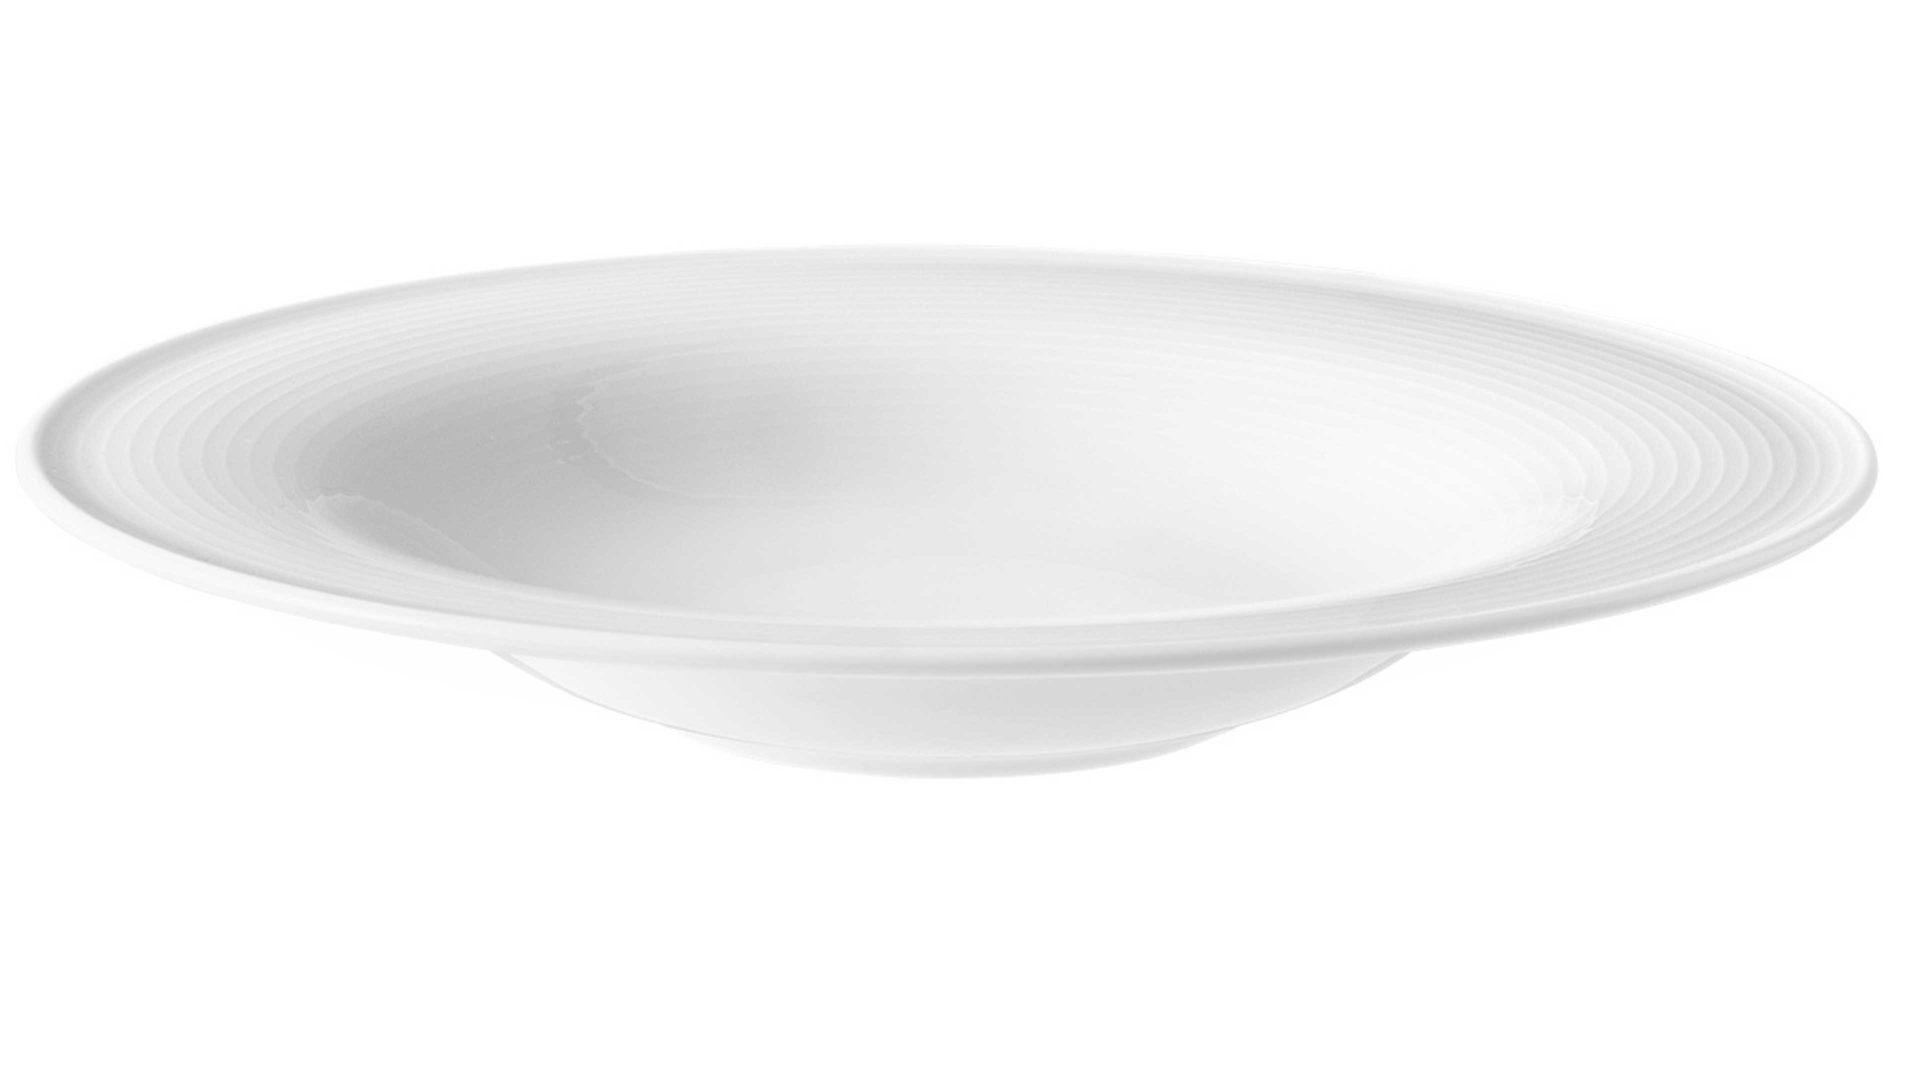 Teller Seltmann aus Porzellan in Weiß Seltmann Geschirrserie Beat 3 – Pastateller weißes Porzellan – Durchmesser ca. 27 cm